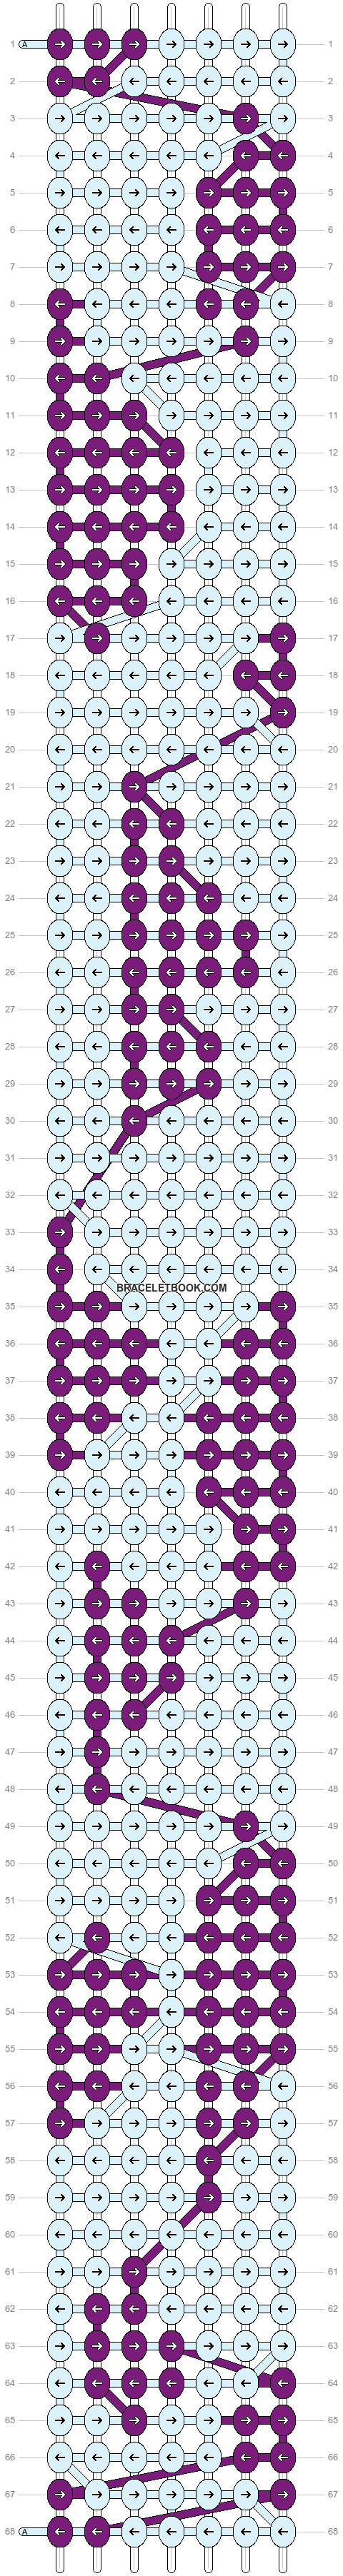 Alpha pattern #1654 variation #39977 pattern